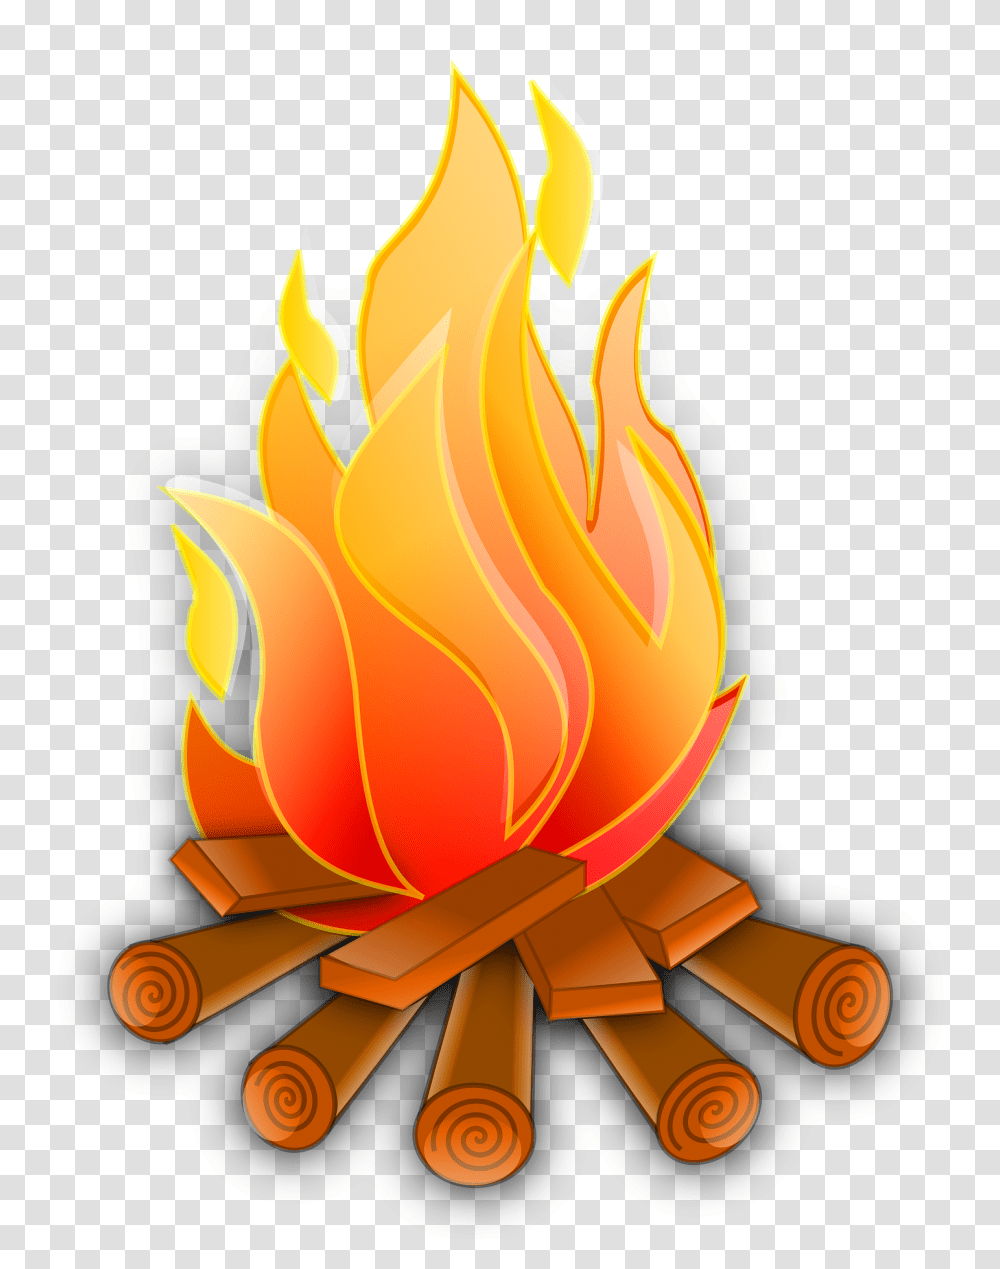 Campfire Vector Image Clipart Campfire, Flame, Lawn Mower, Tool, Bonfire Transparent Png